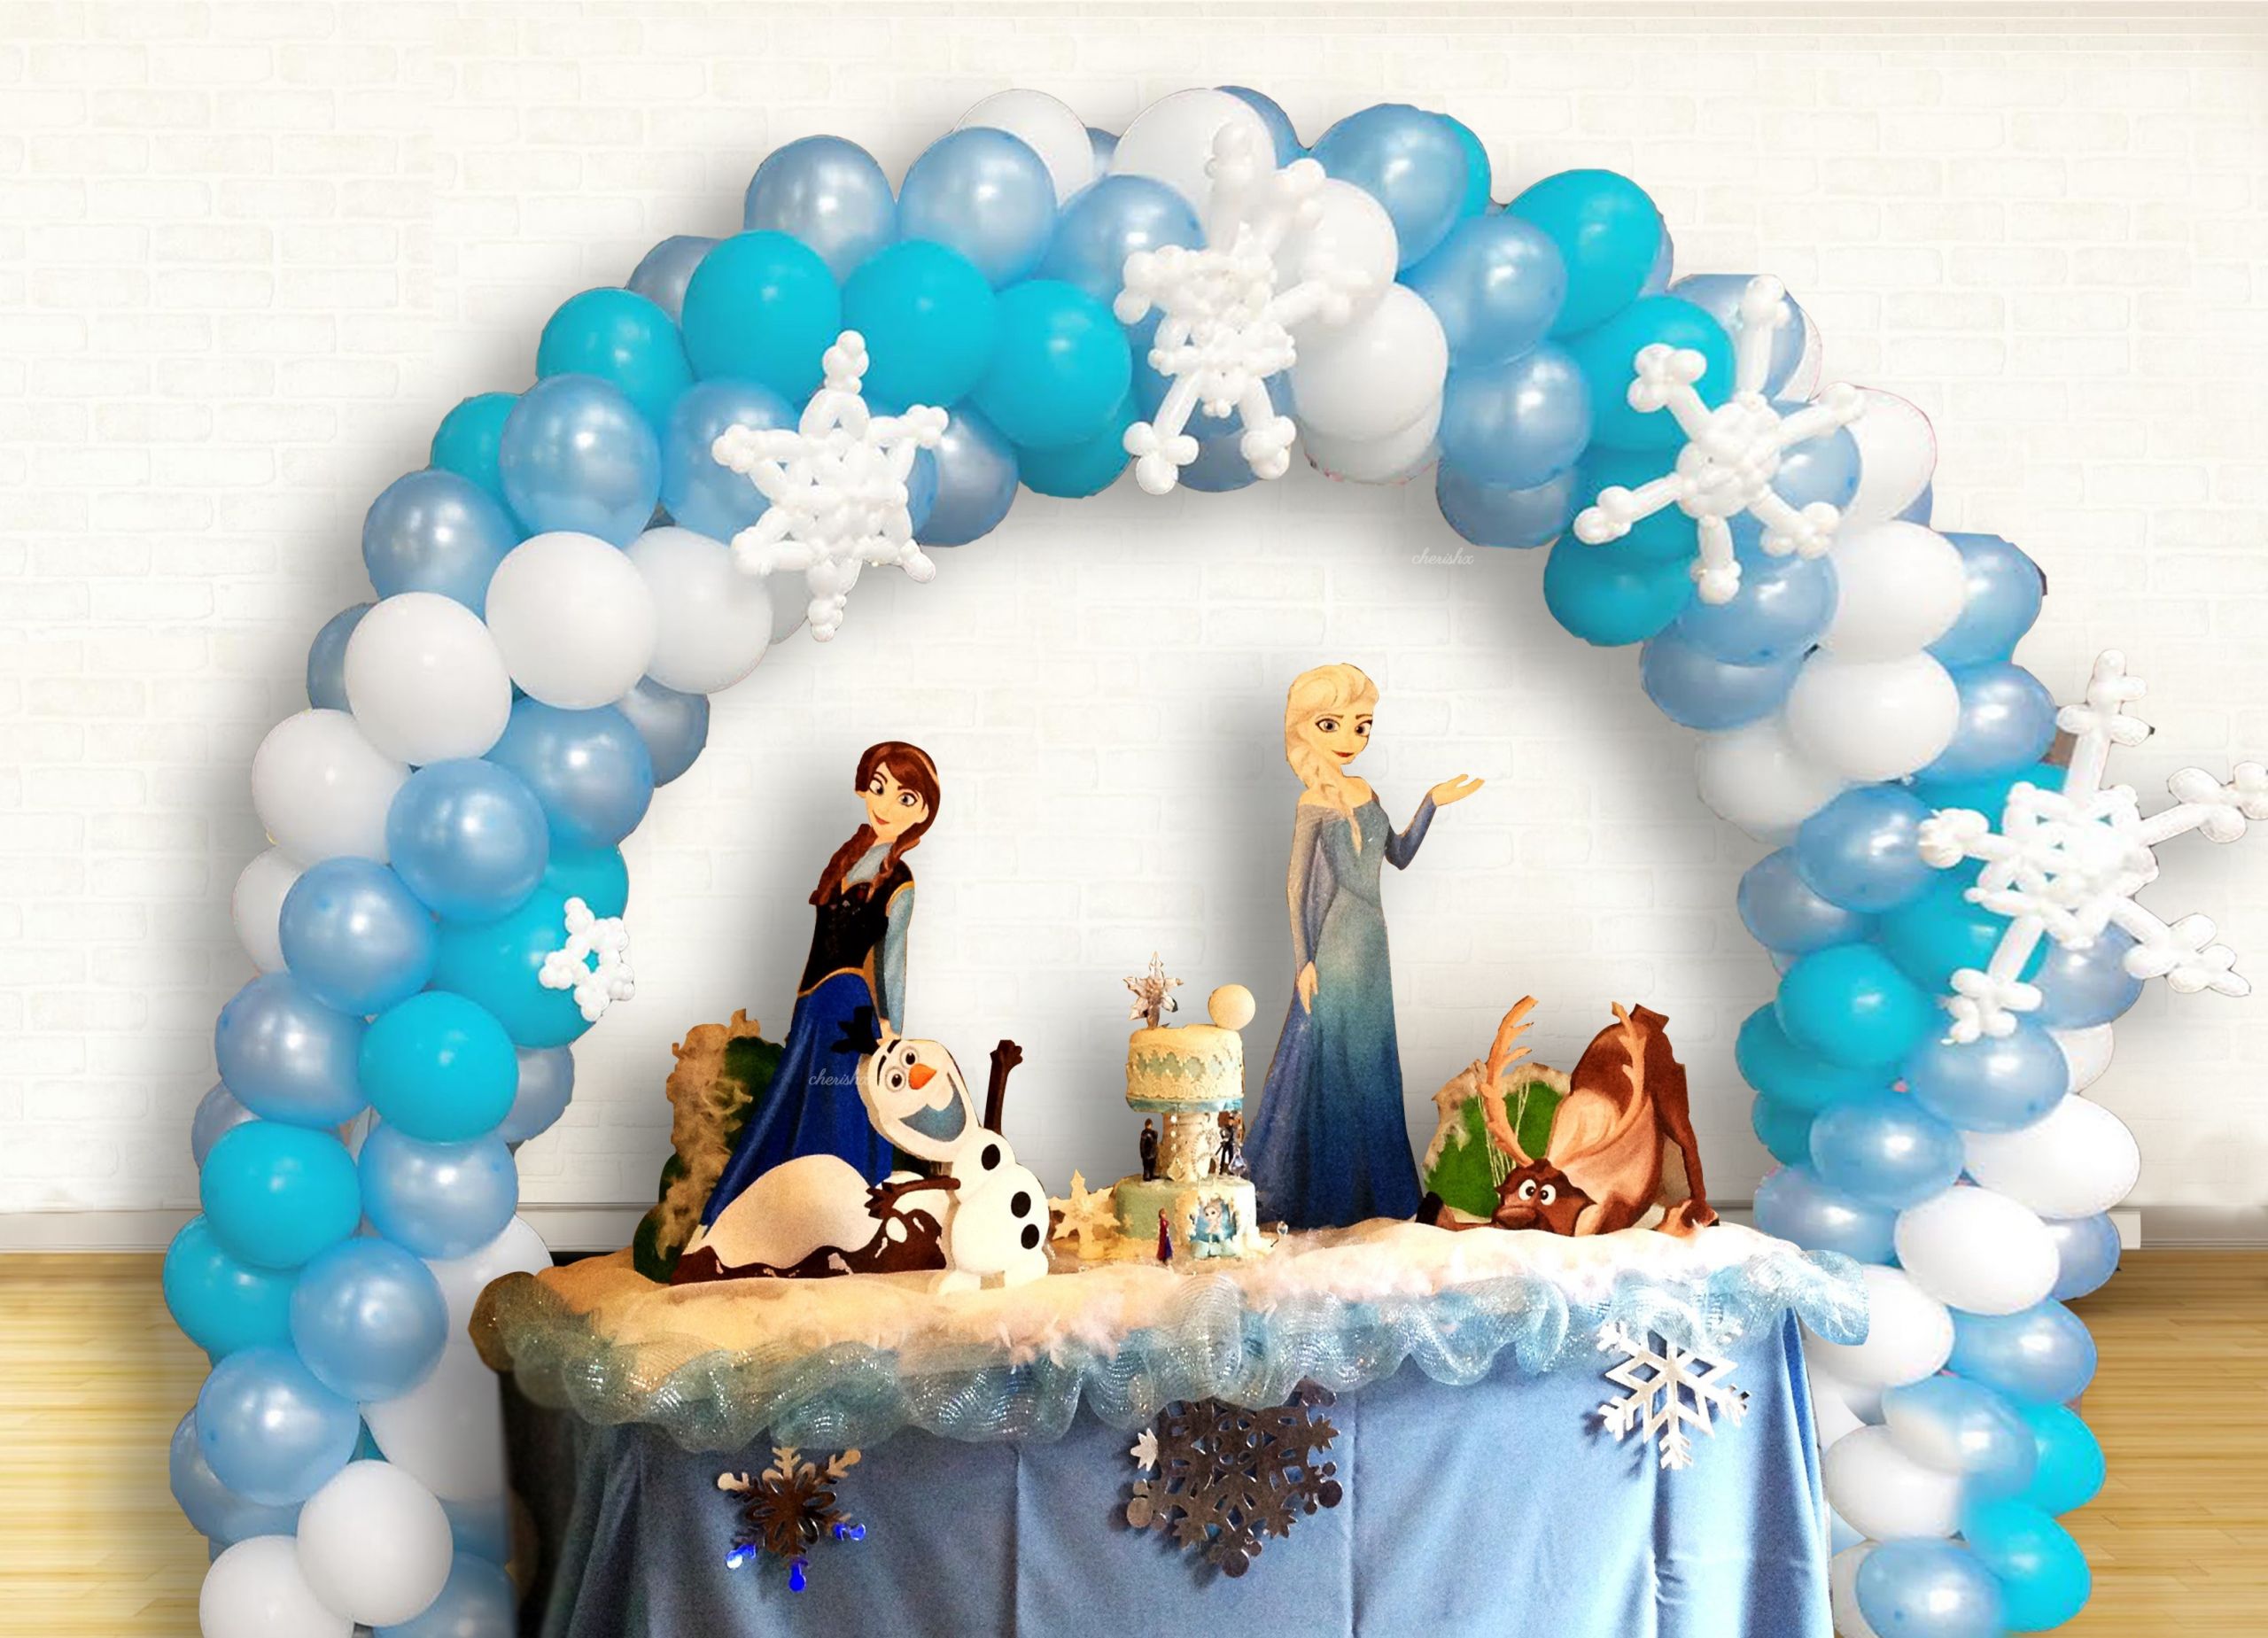 Frozen Birthday Decoration
 Elsa Frozen Birthday theme balloon decoration at home for